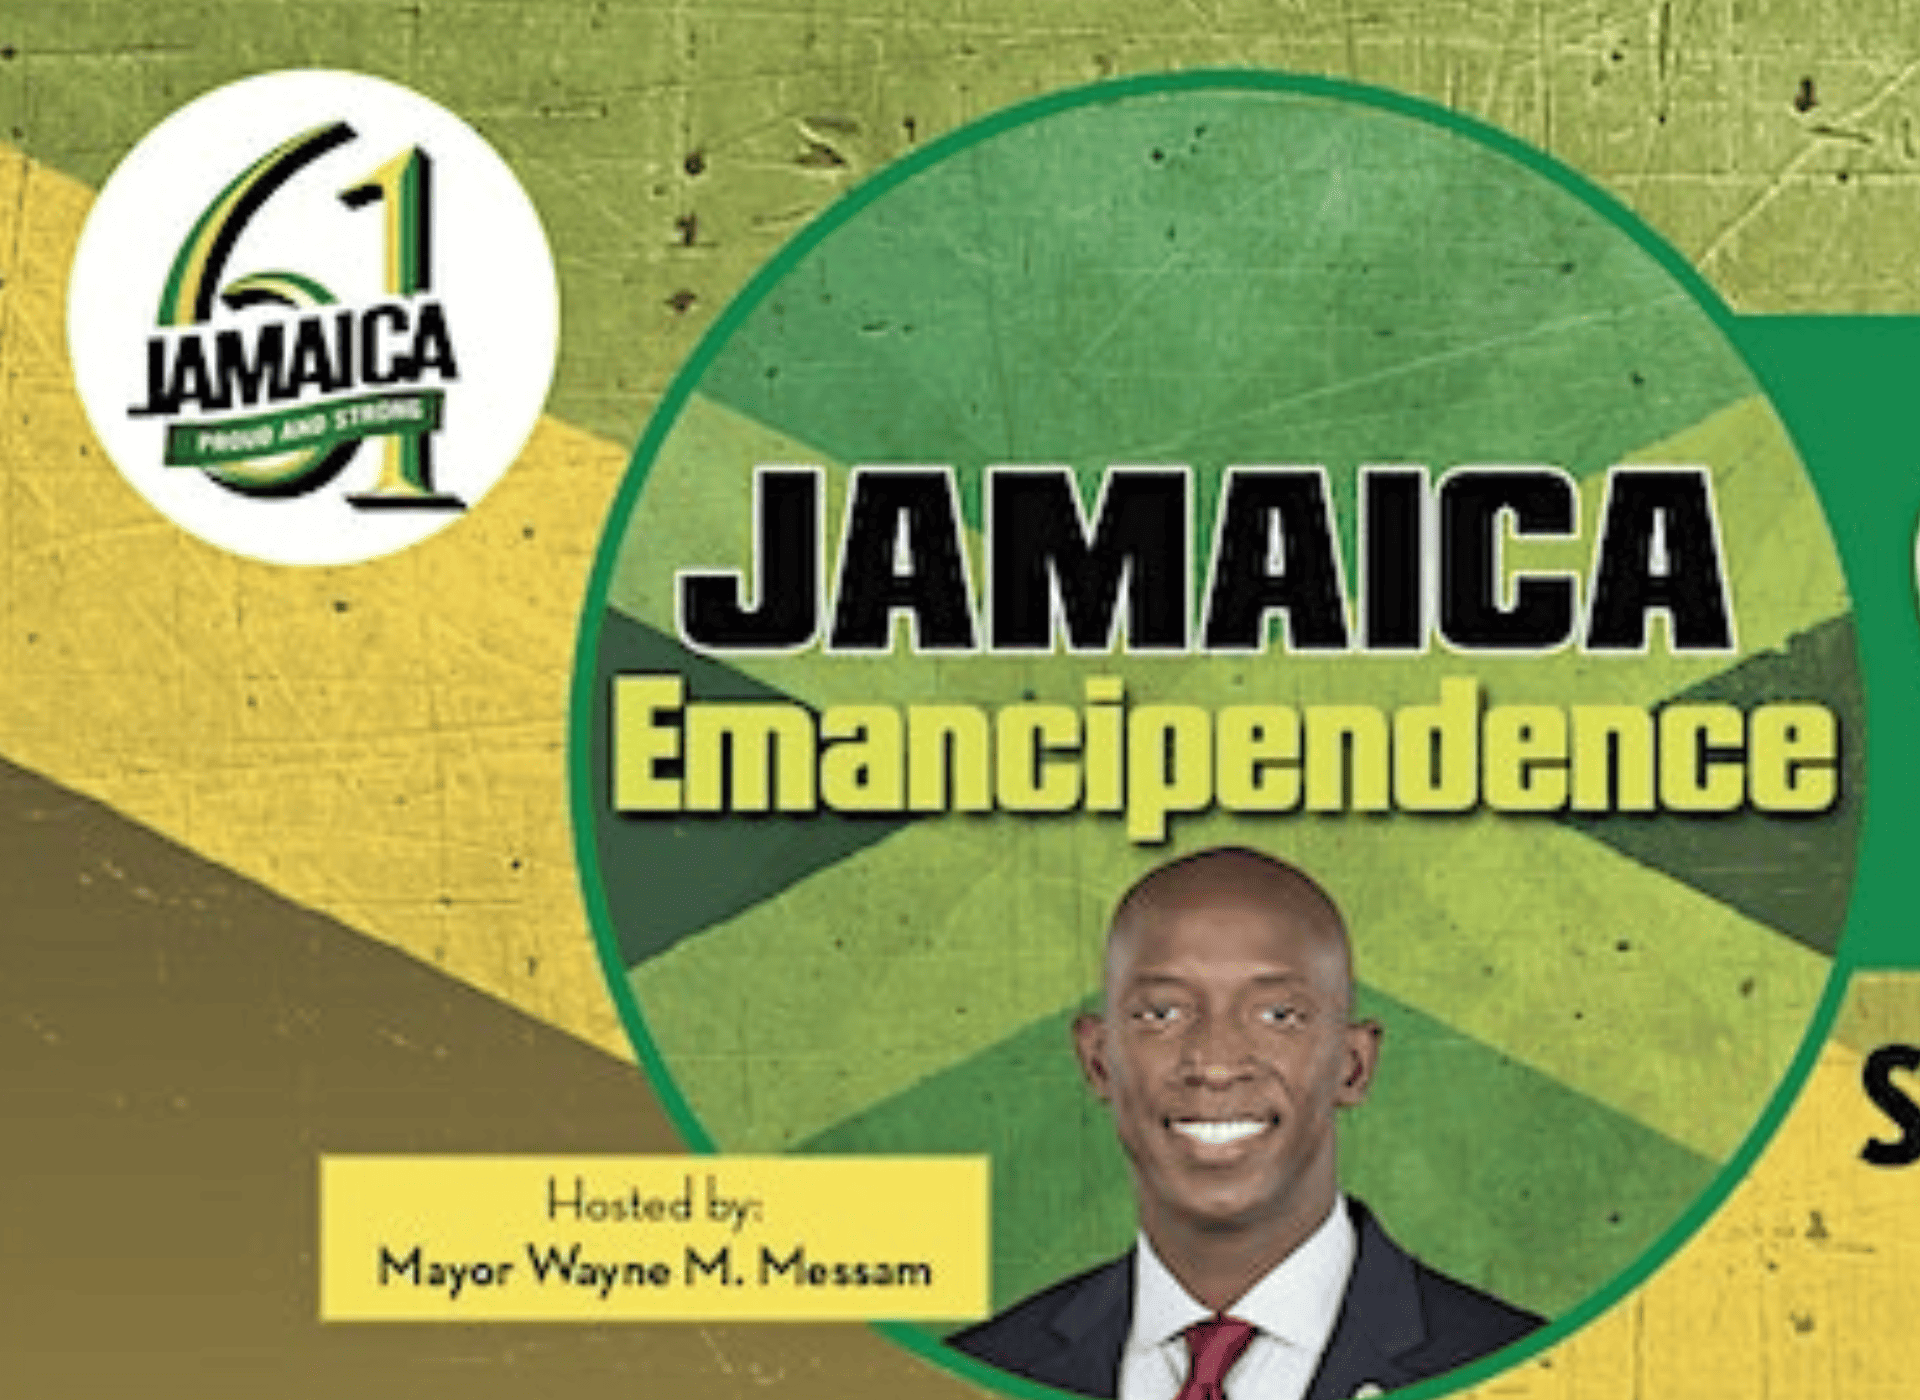 City of Miramar - Jamaica Emacipendence